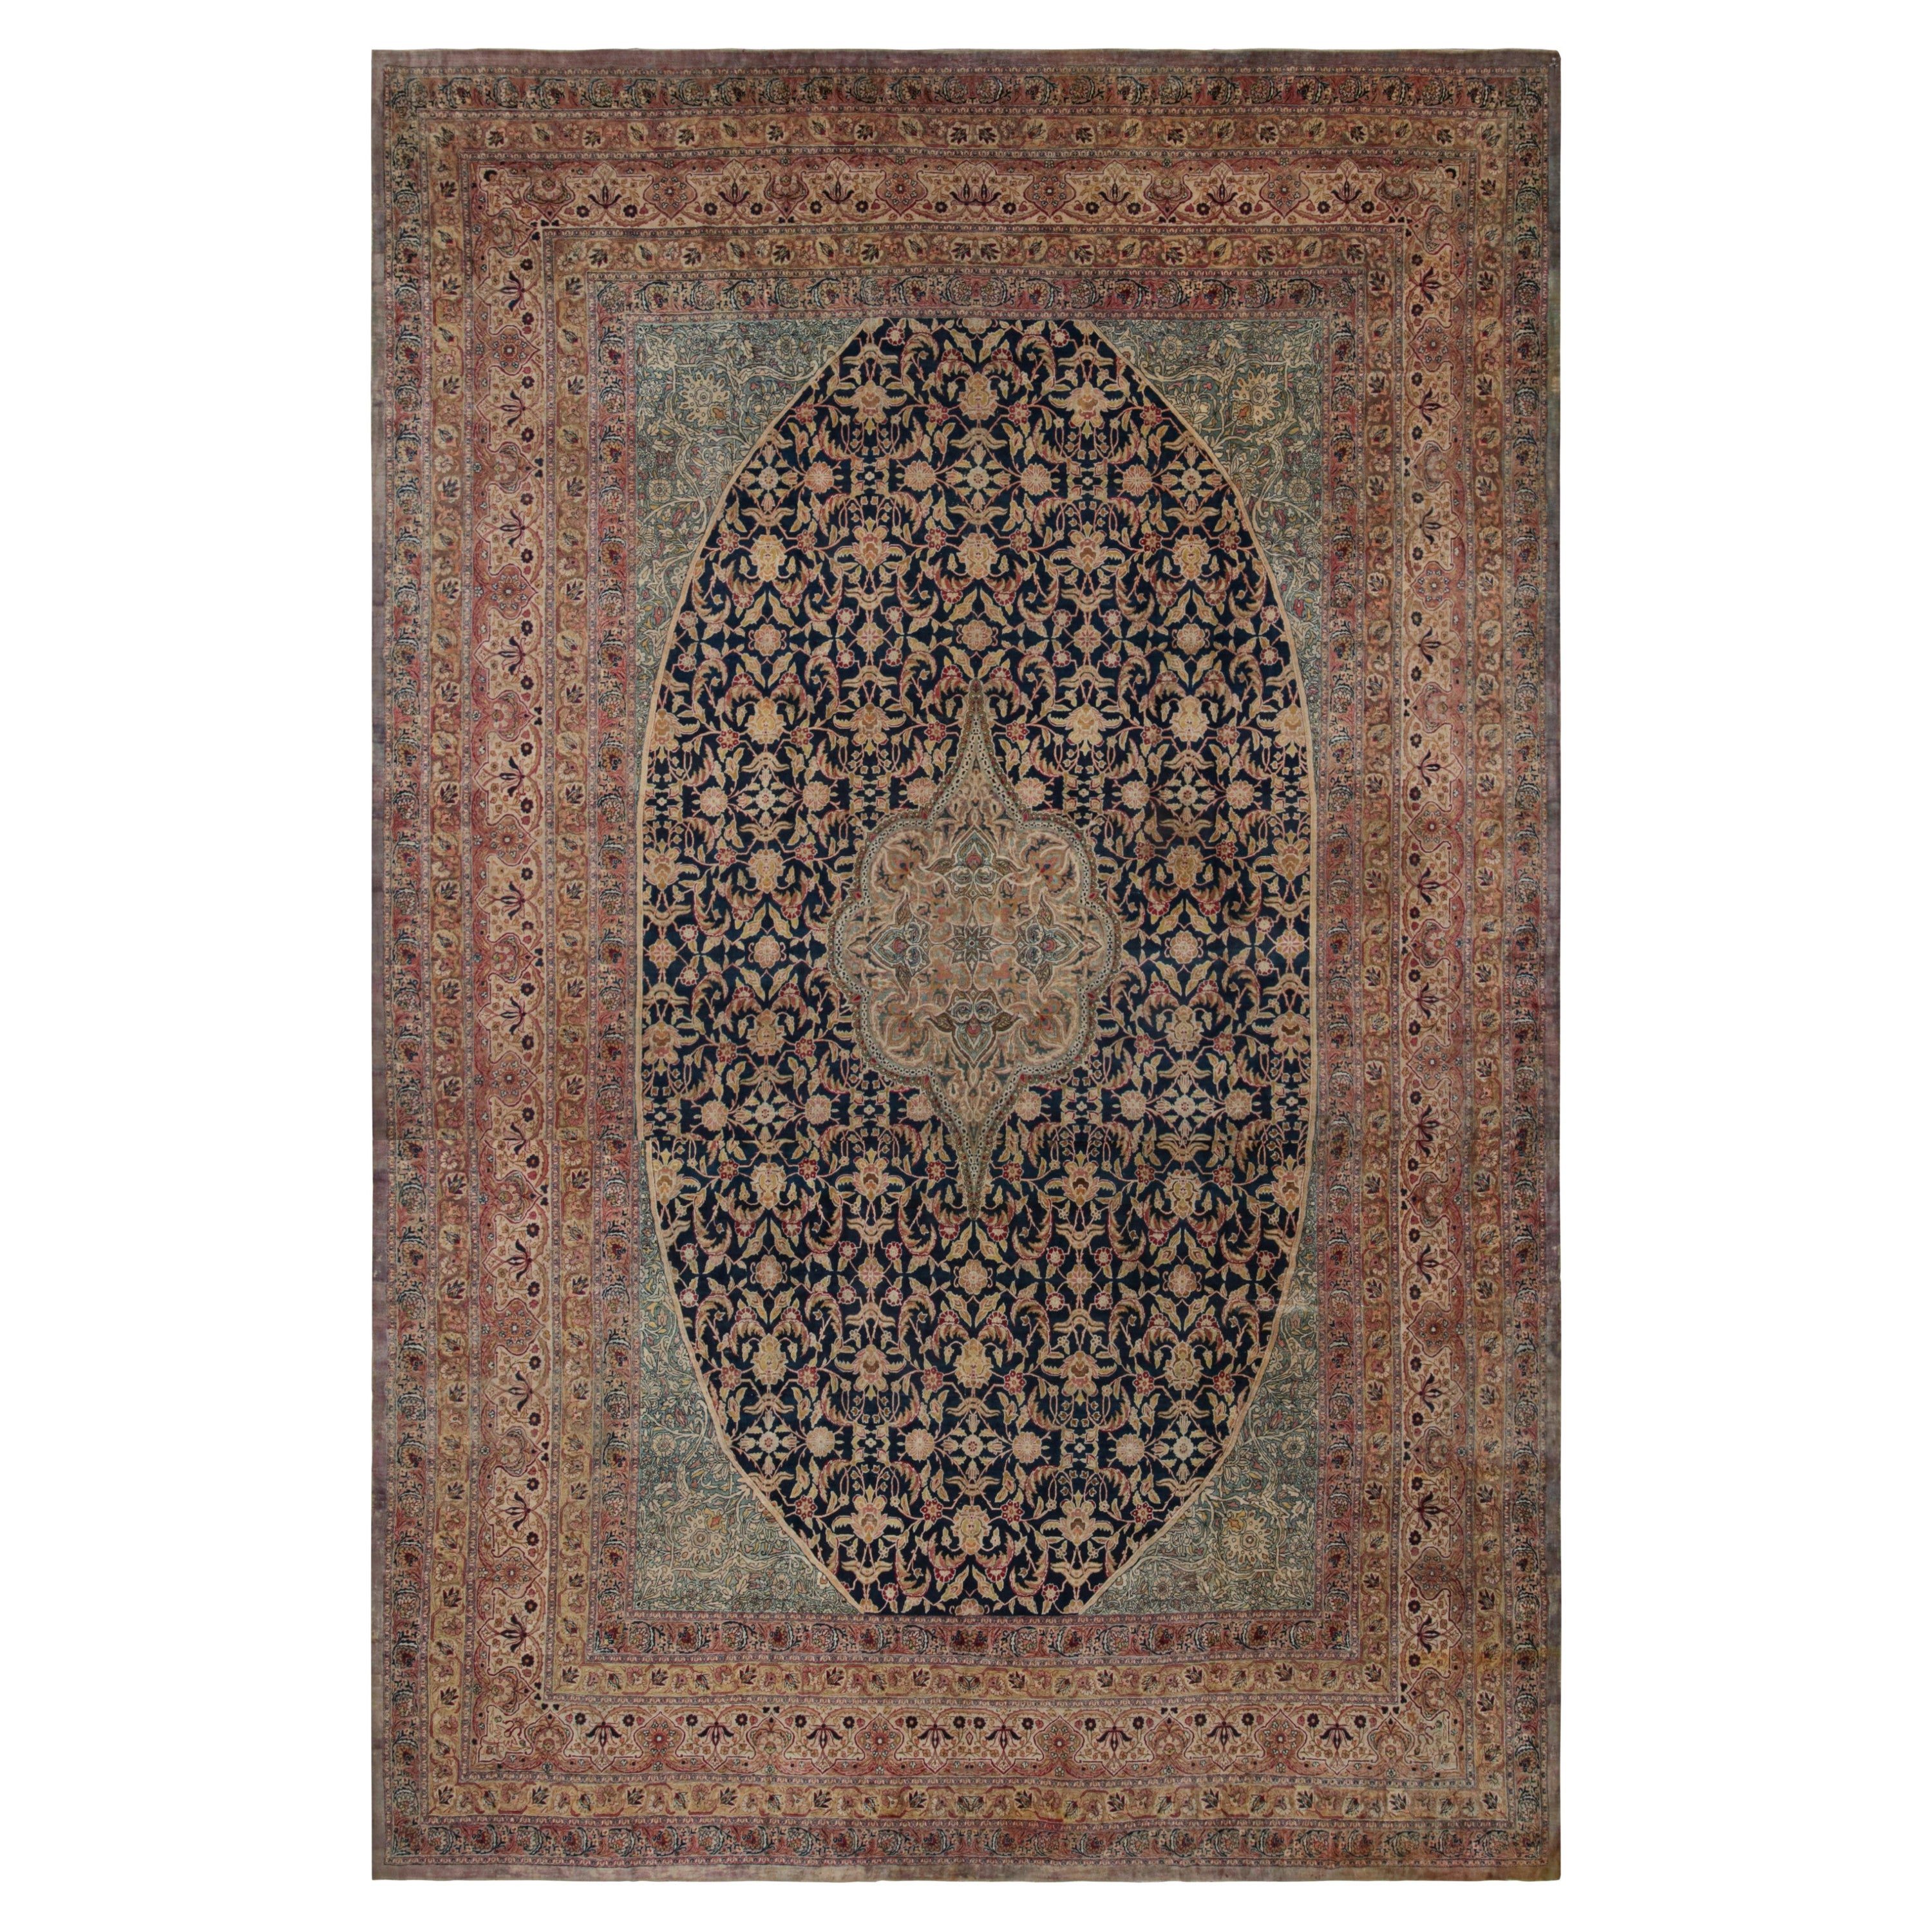 Antique Persian Kerman Lavar rug, with Floral Patterns For Sale